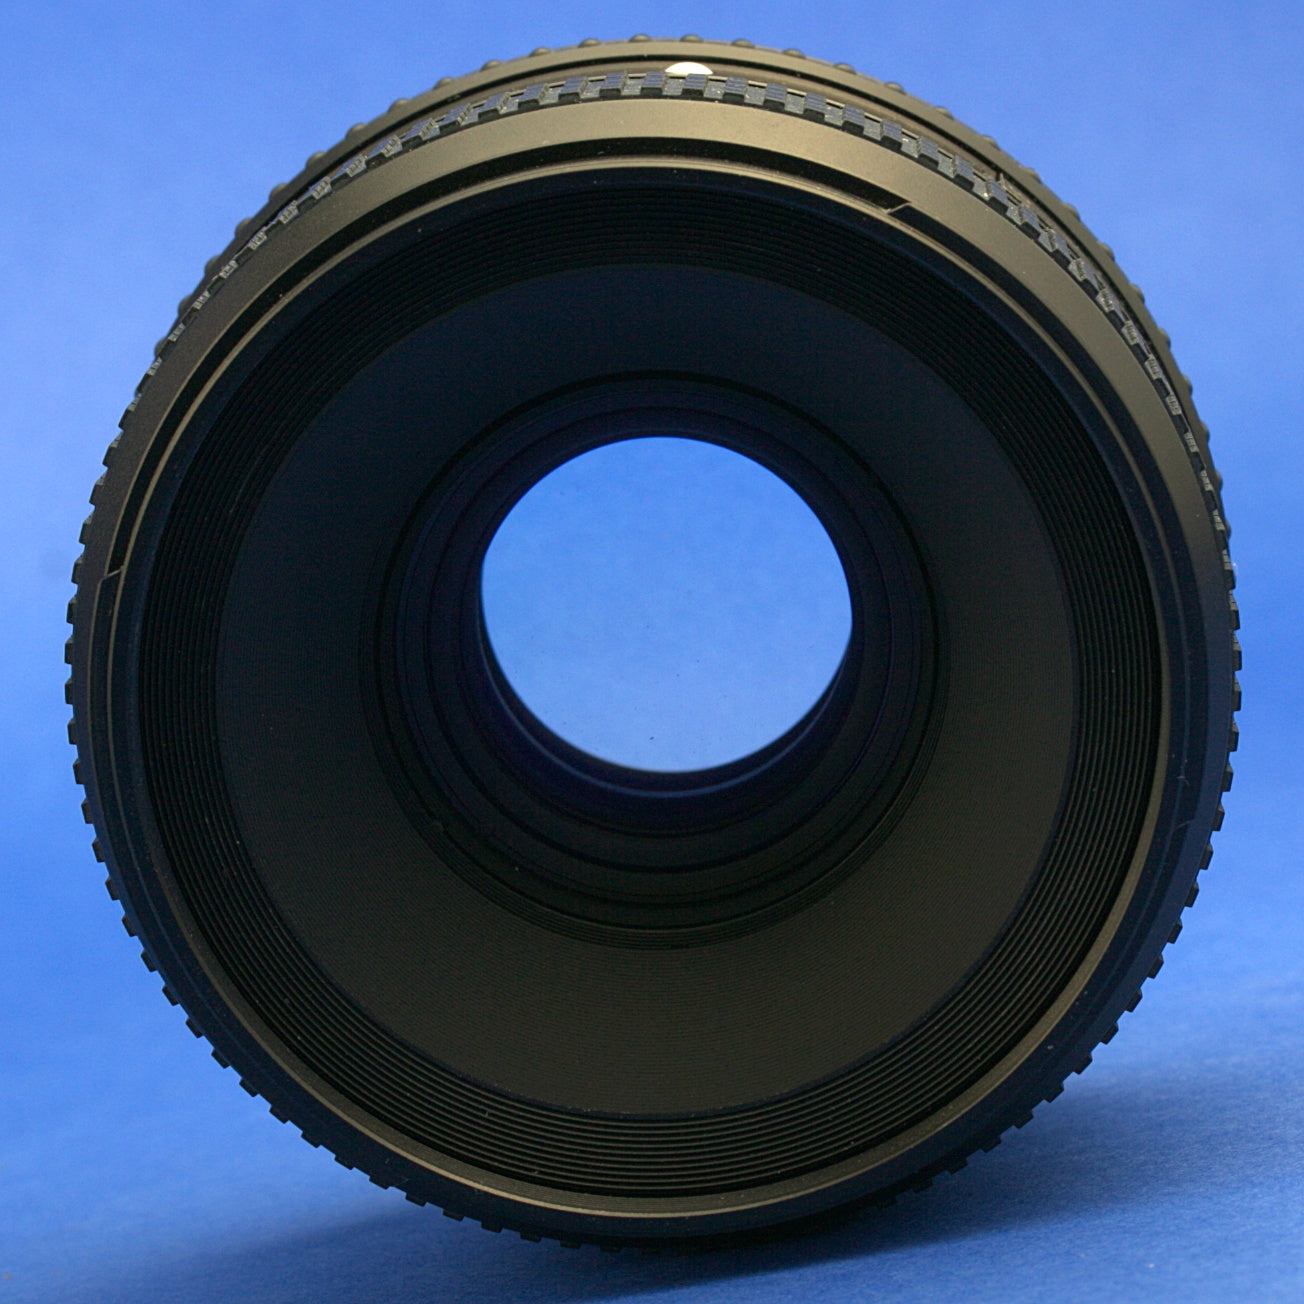 Schneider 80mm 2.8 LS AF Lens for Mamiya 645 DF Cameras Beautiful Condition